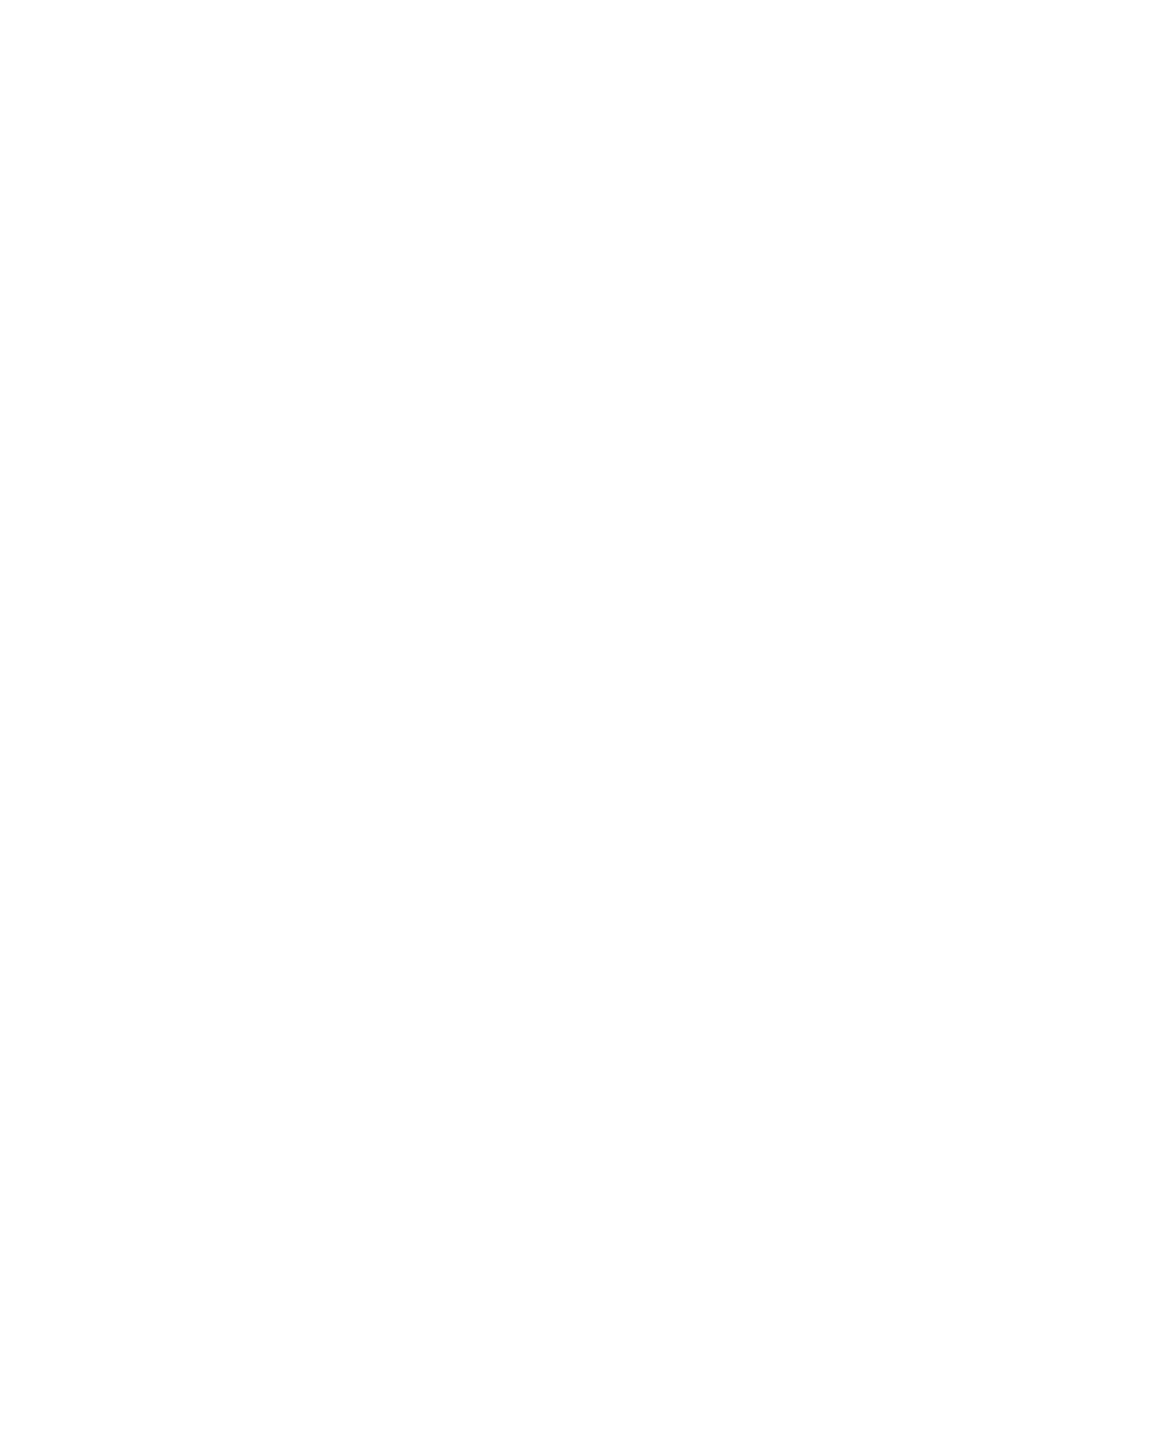 Durga Puja Online